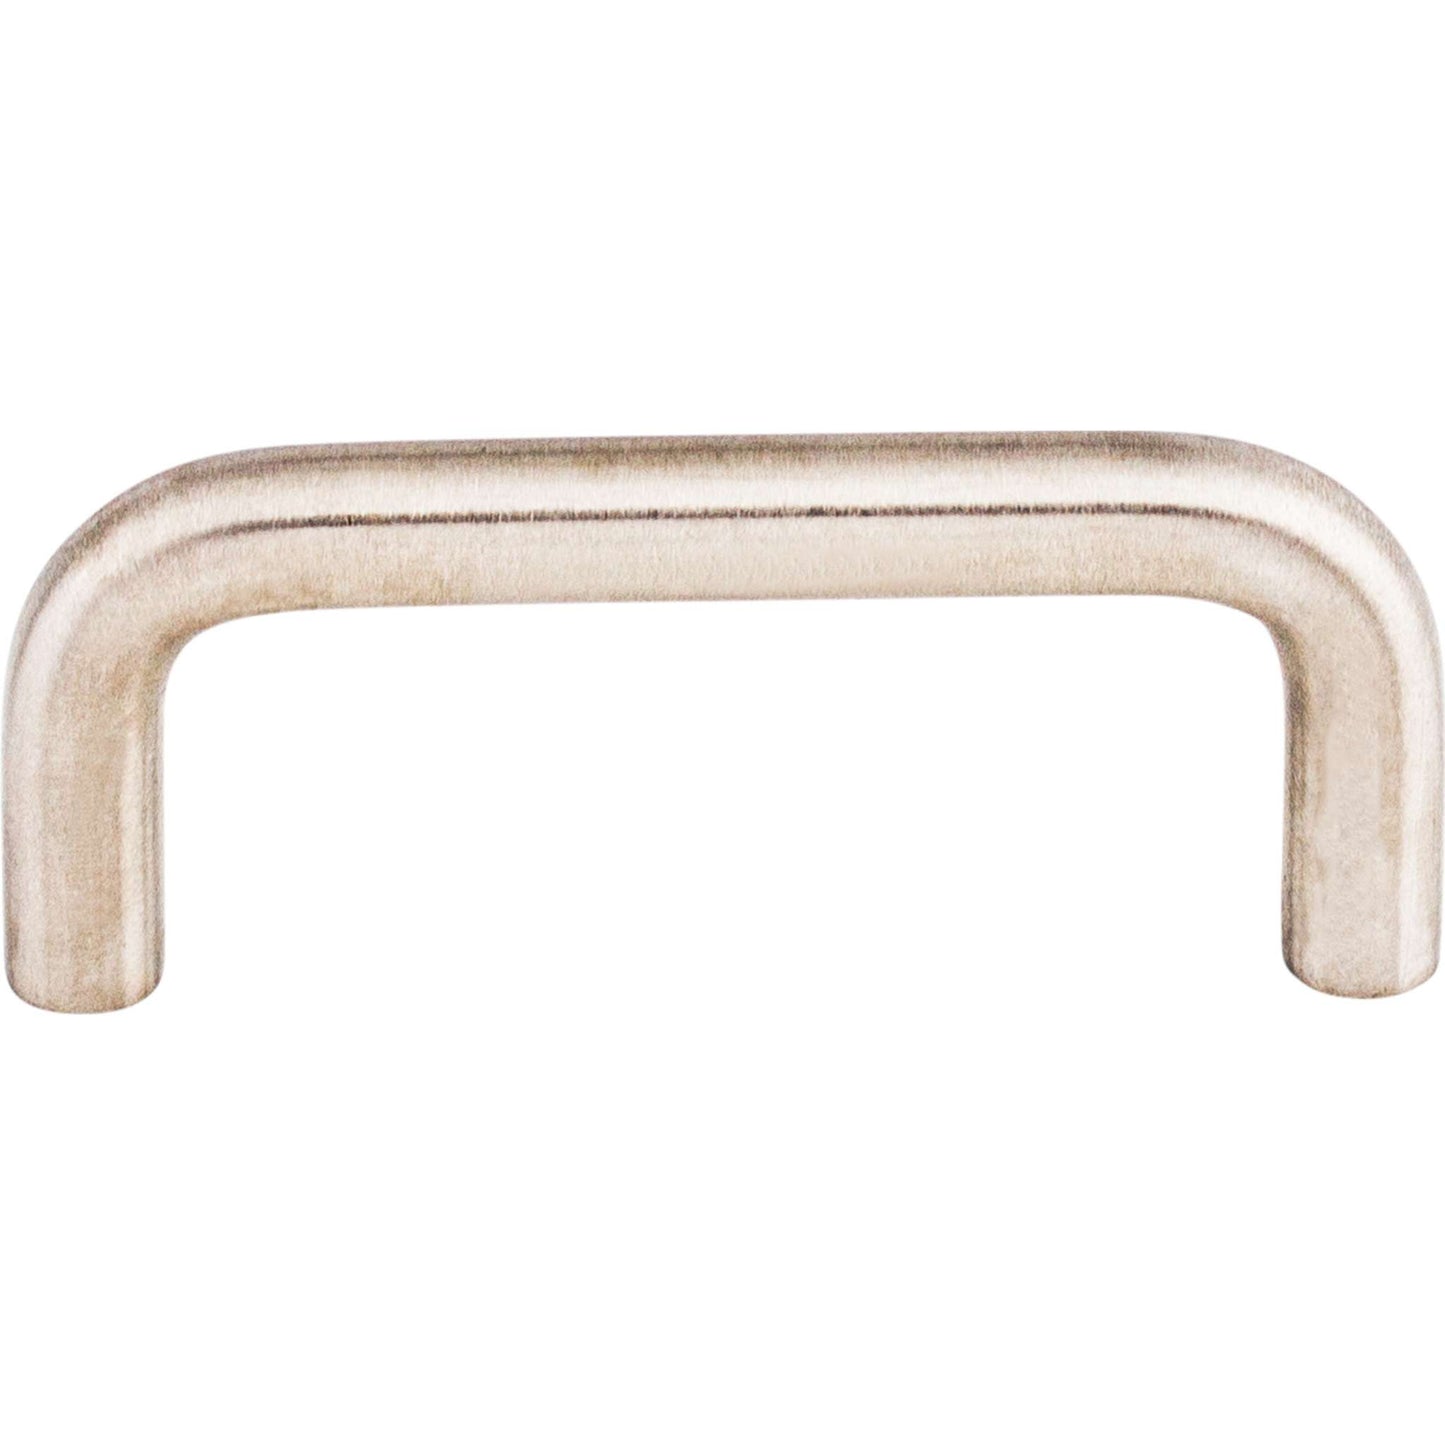 Top Knobs - Bent Bar (10mm Diameter)